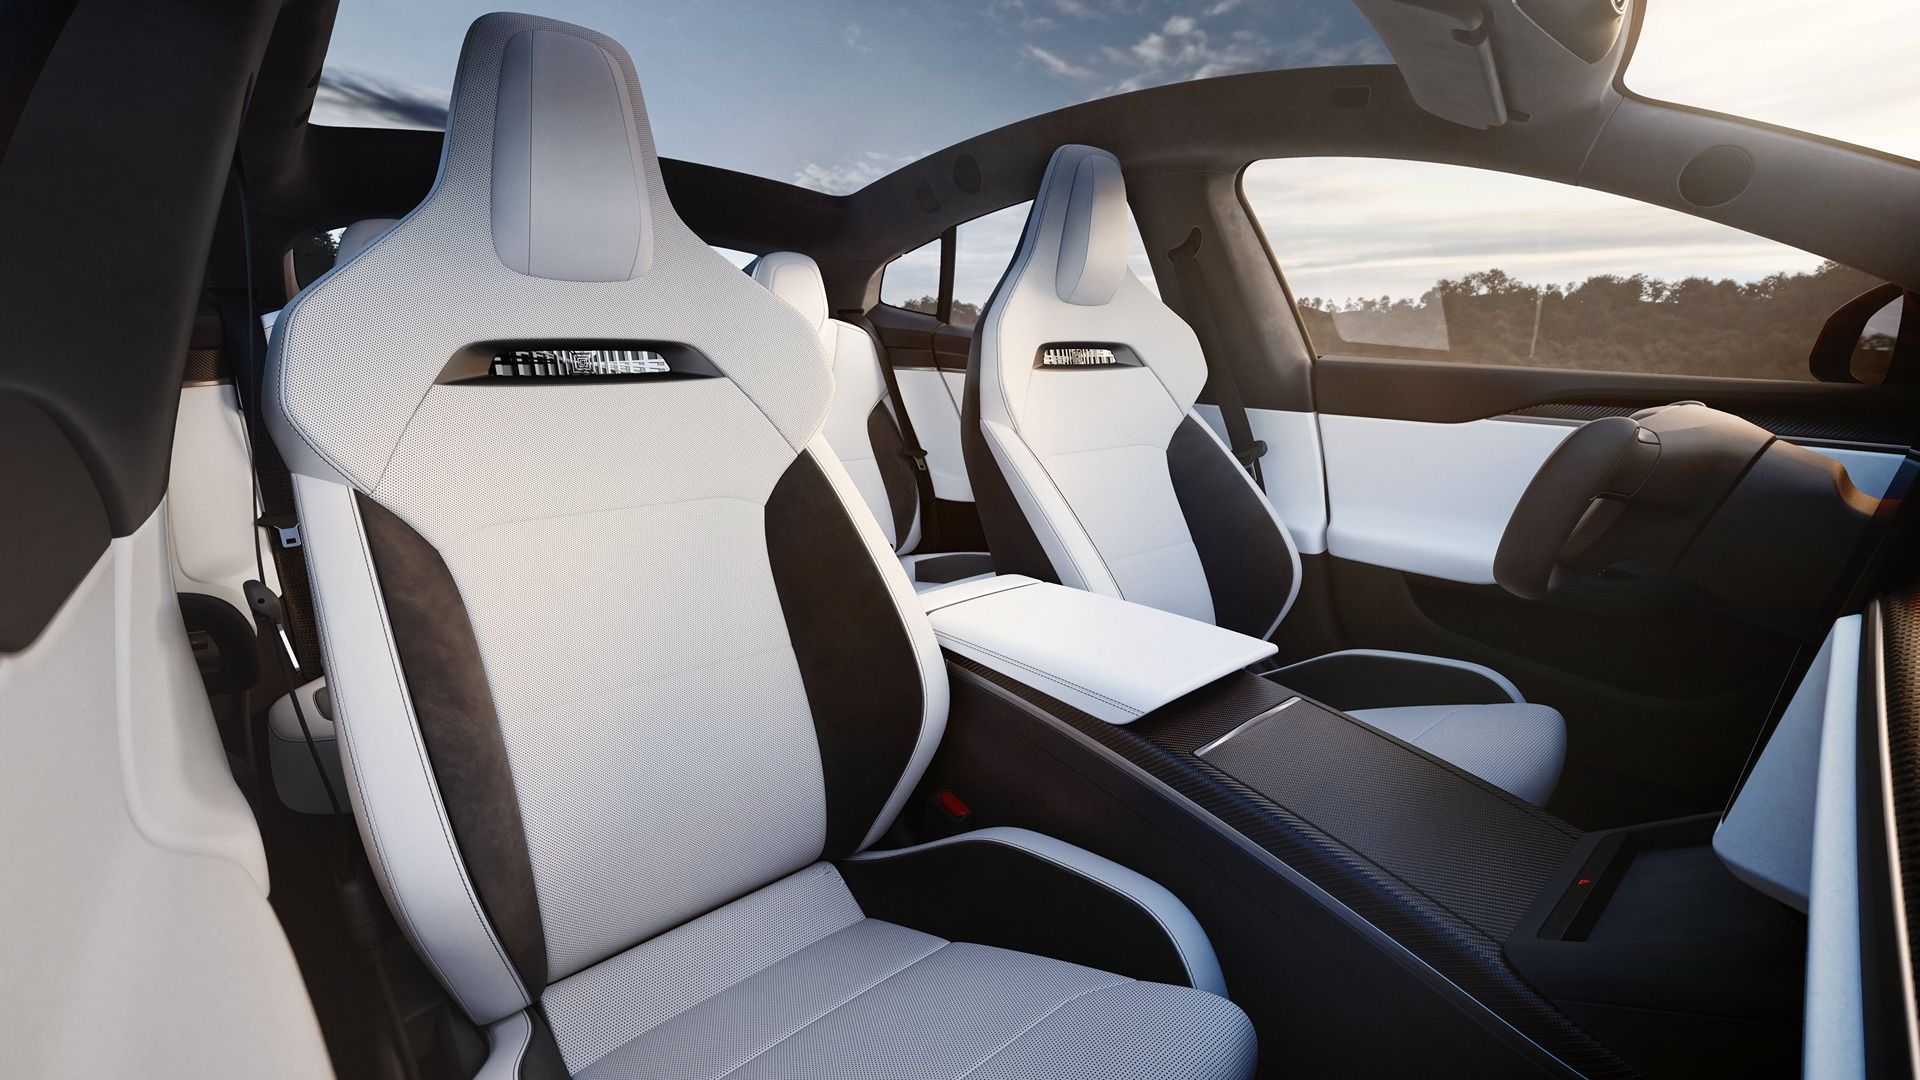 Tesla Model S Plaid interior, sports seats